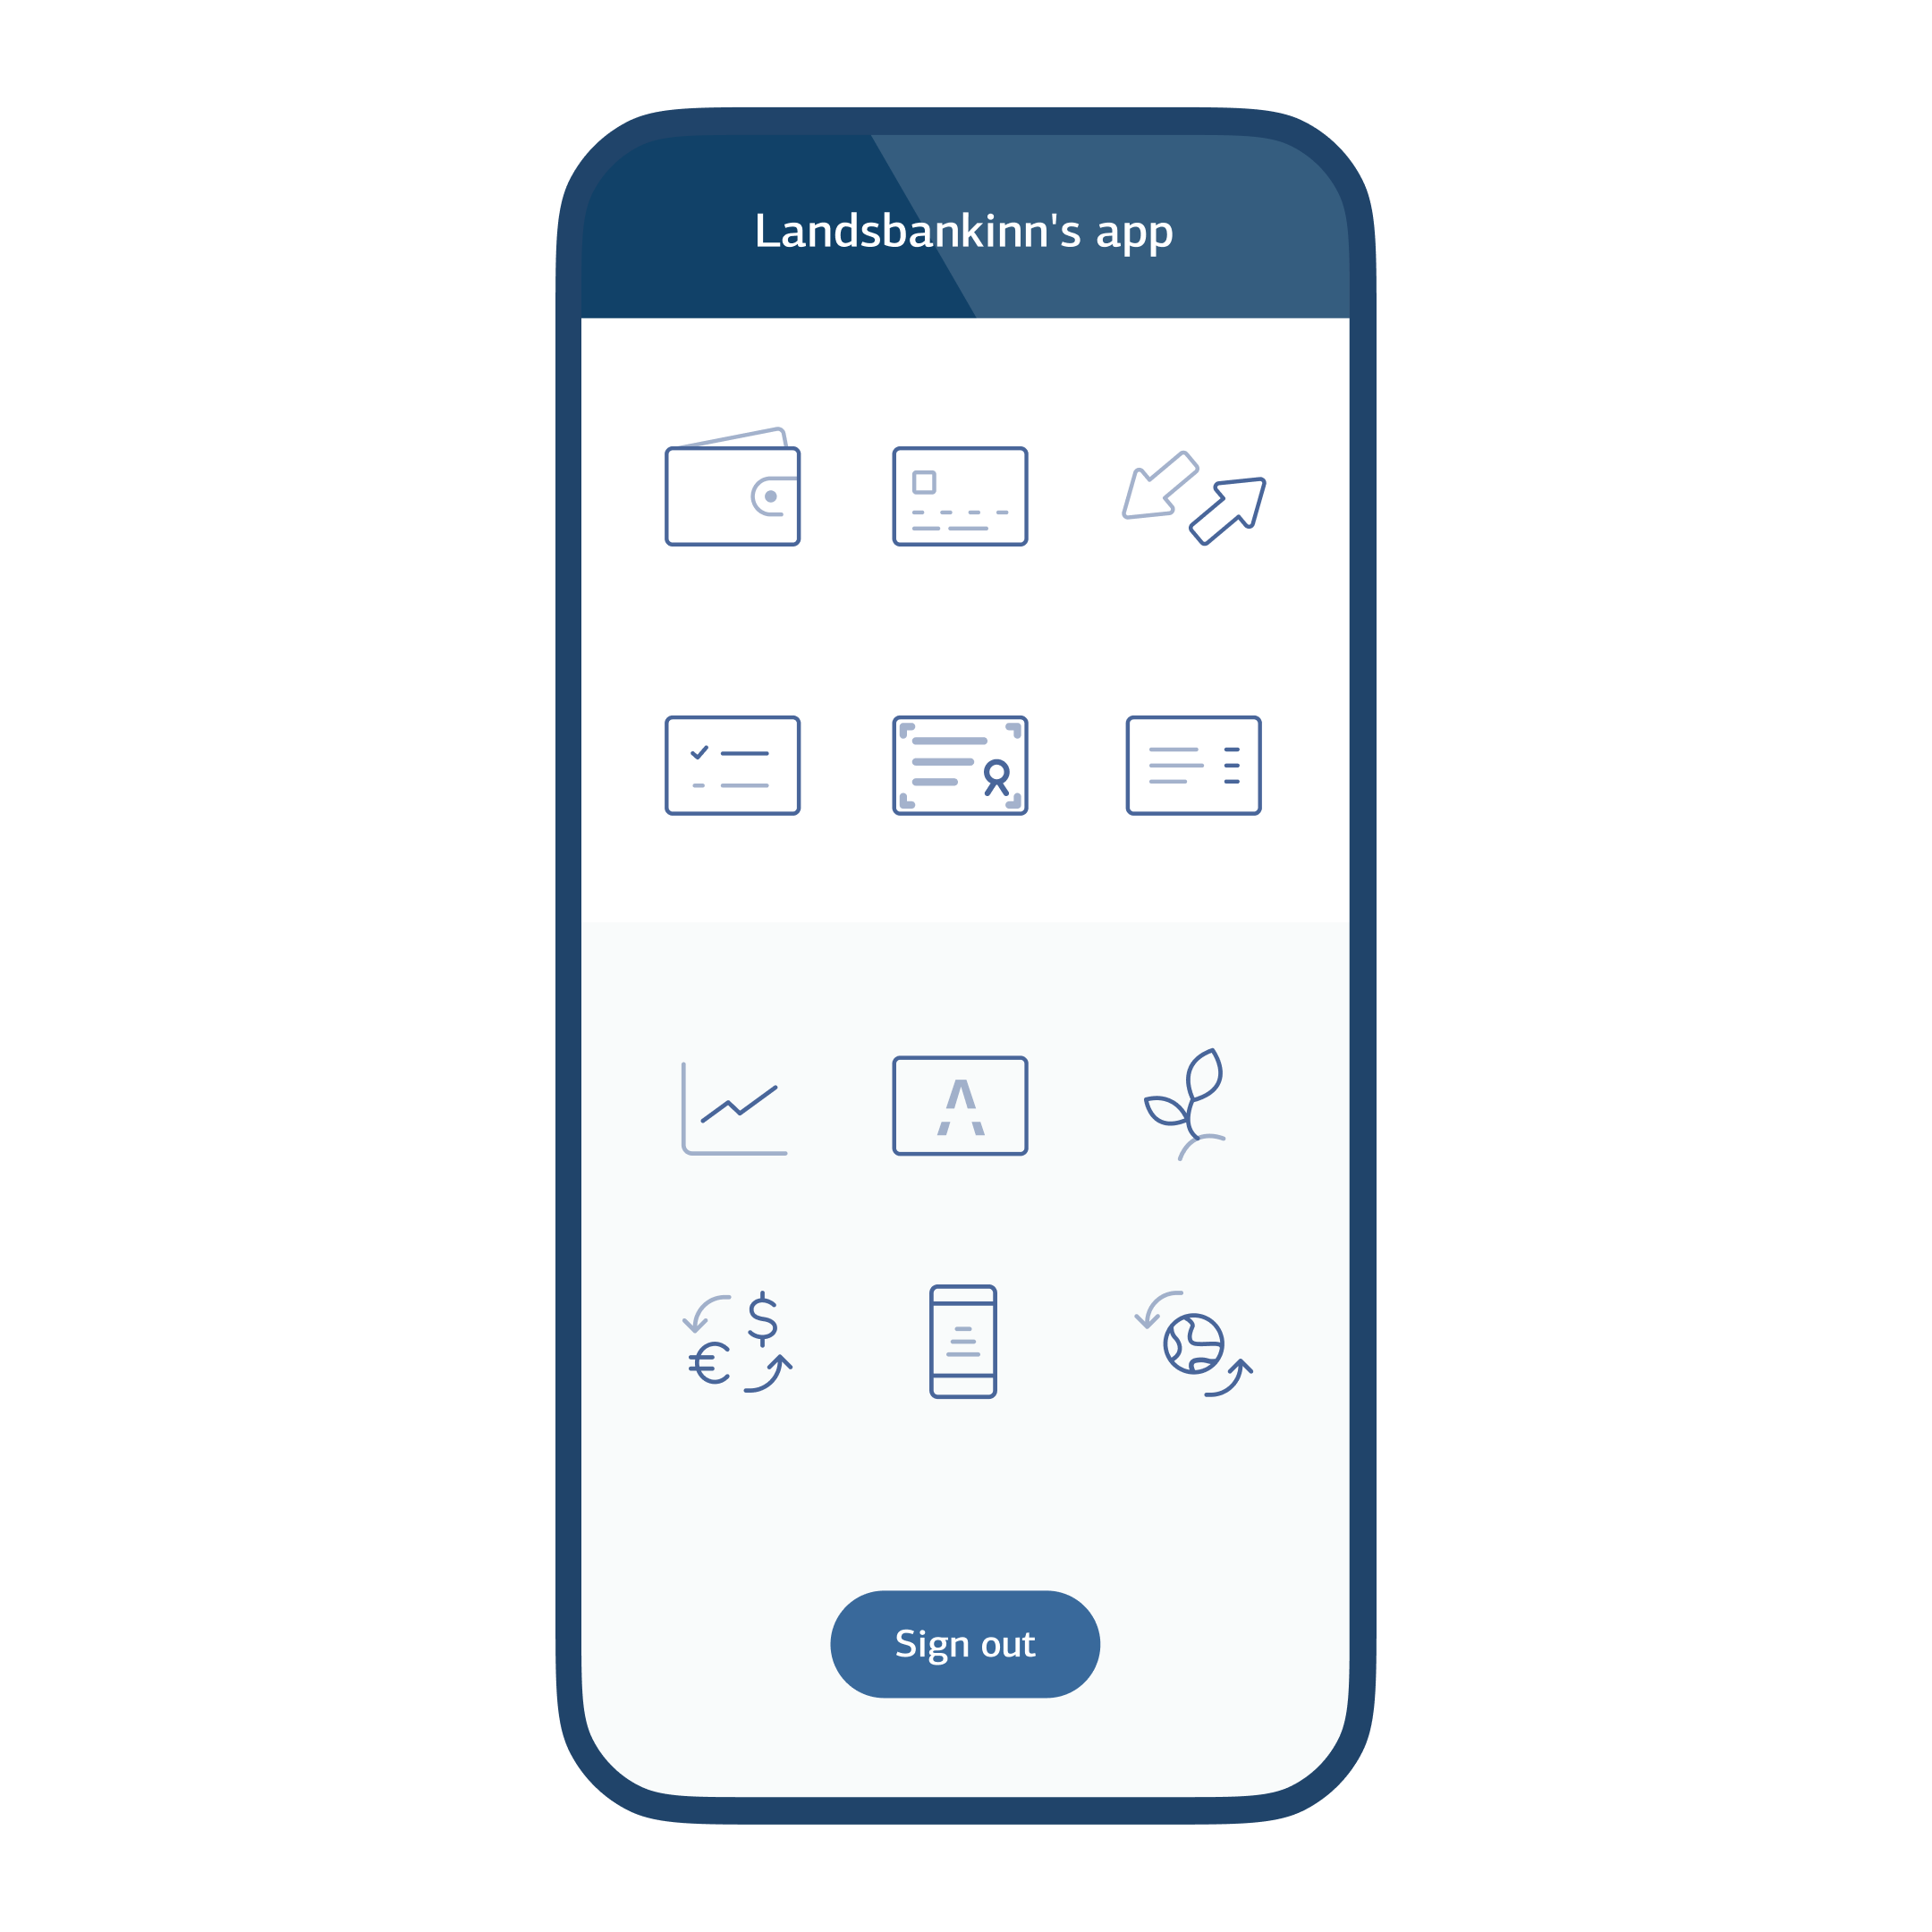 Landsbankinn's app